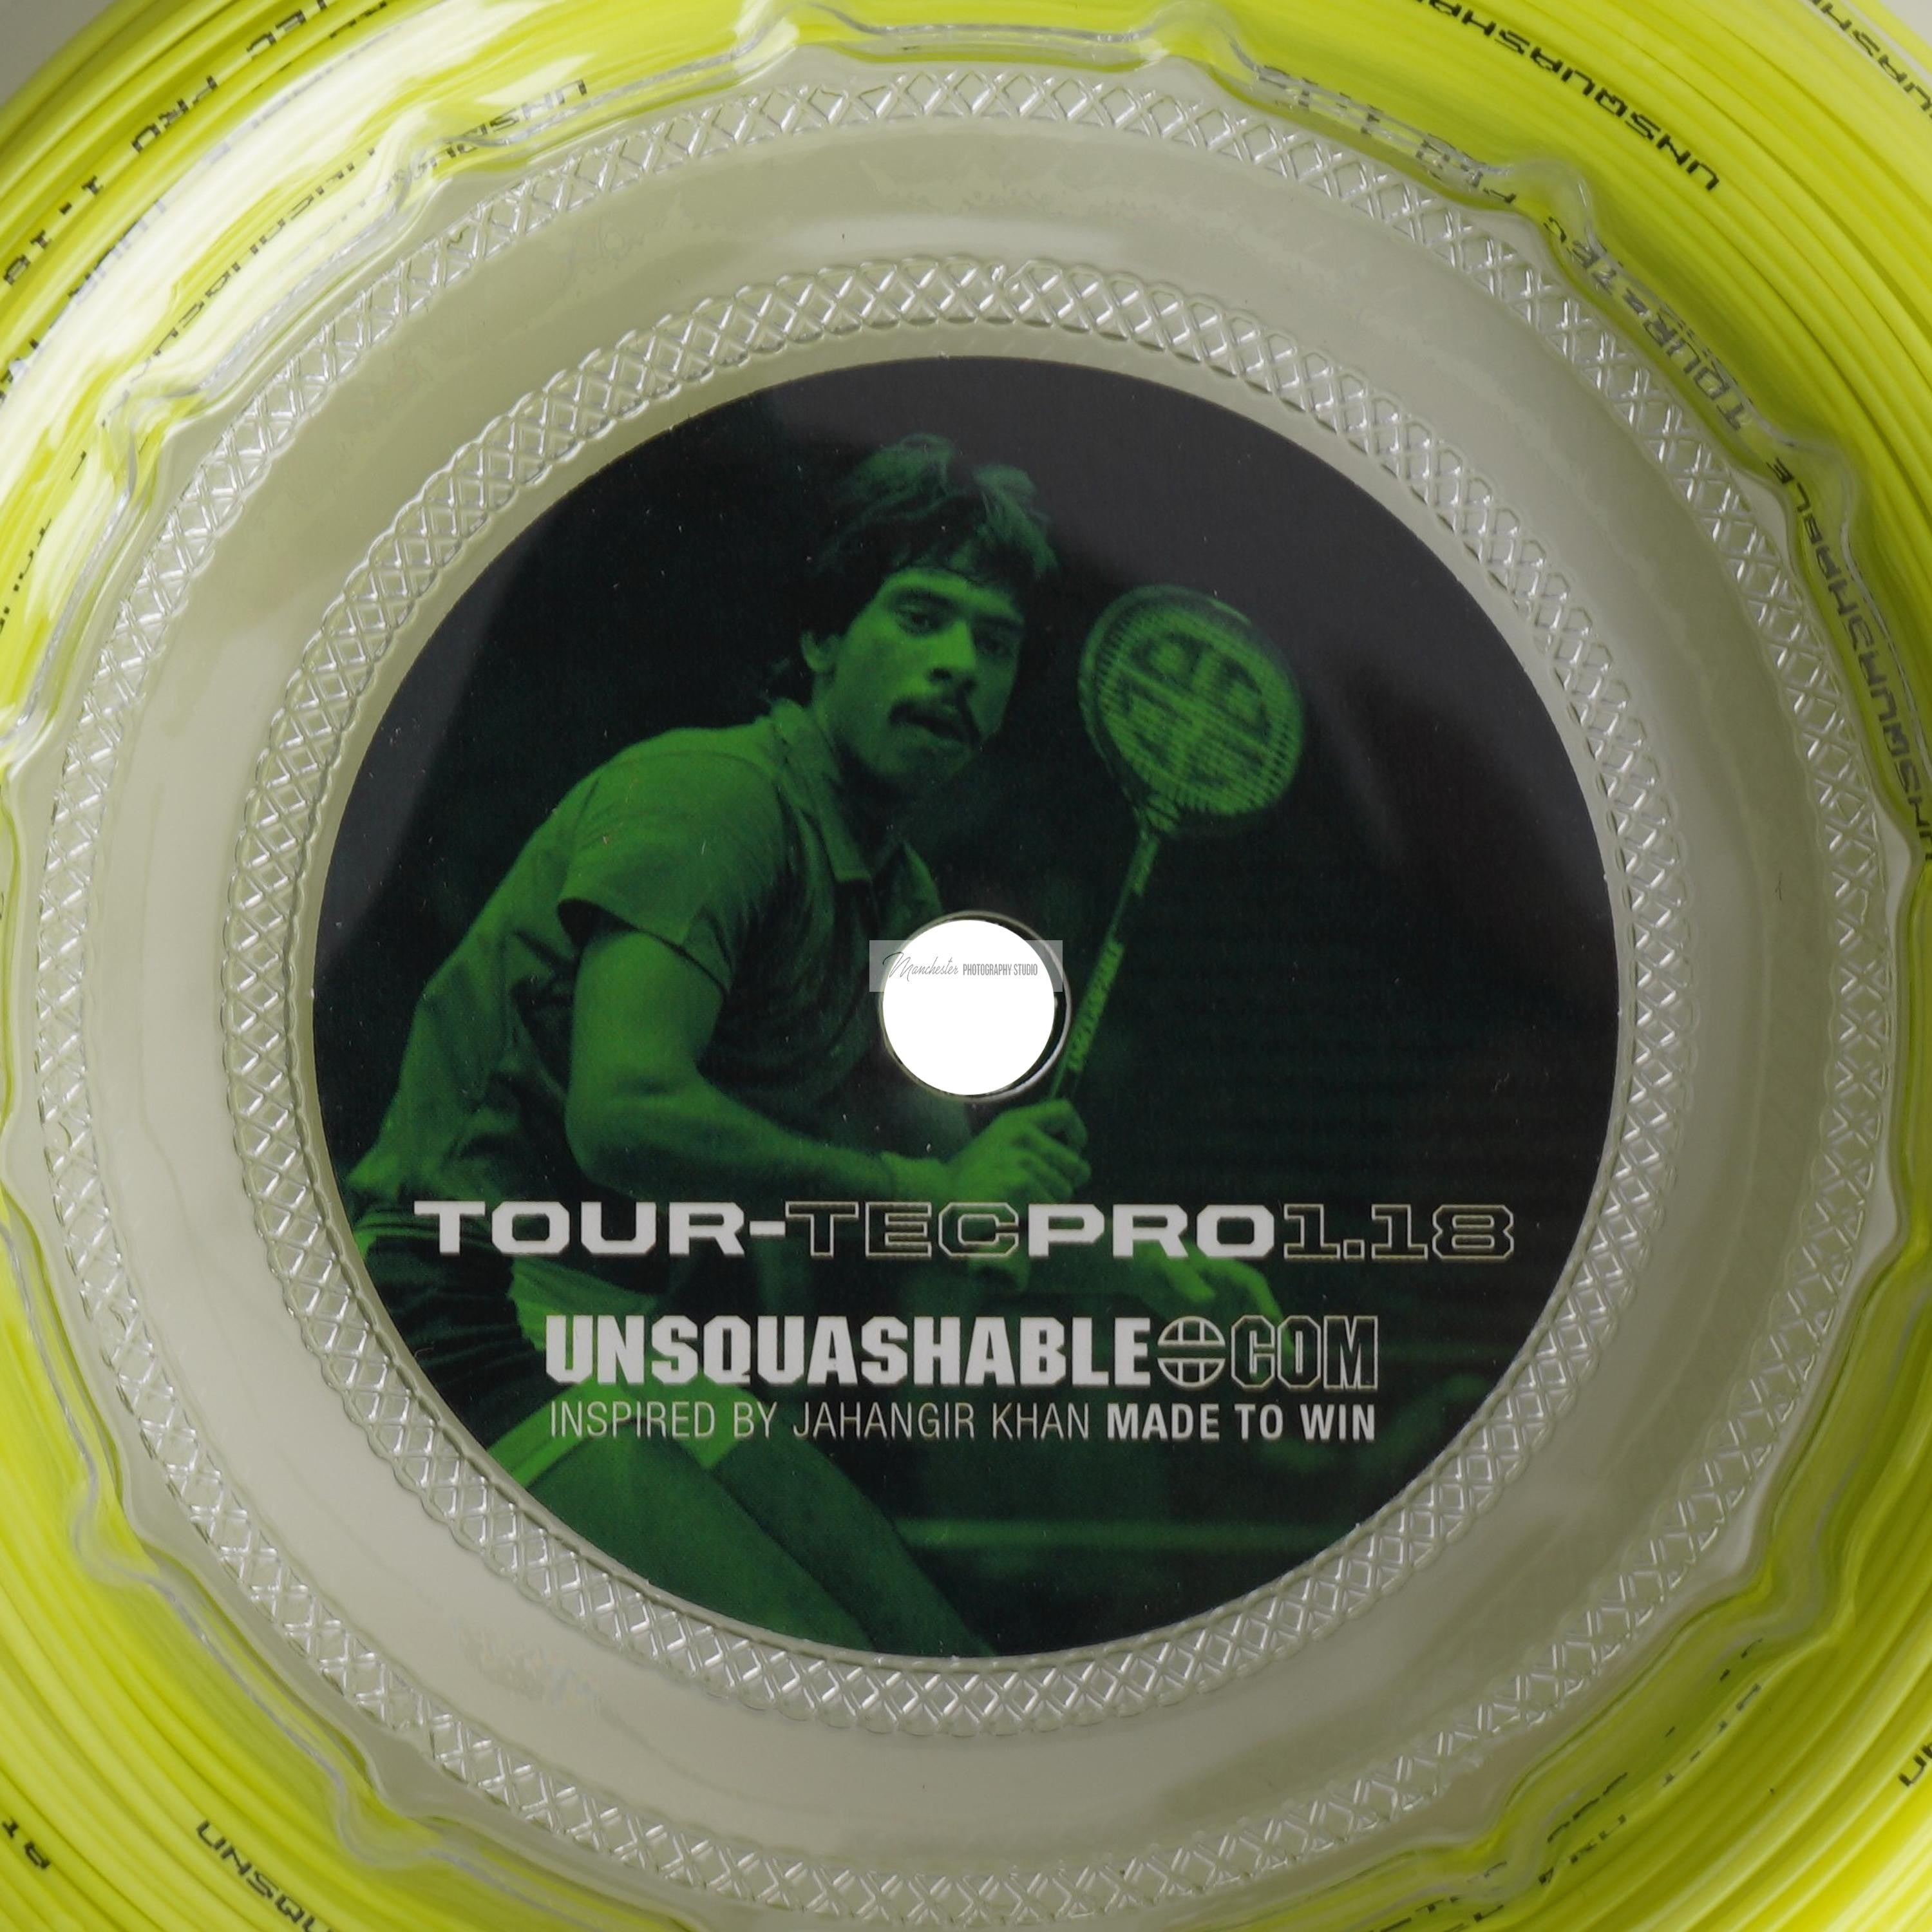 UNSQUASHABLE Tour-Tec Pro 1.18 (Neongelb) 100 m Rolle - Squashsaiten